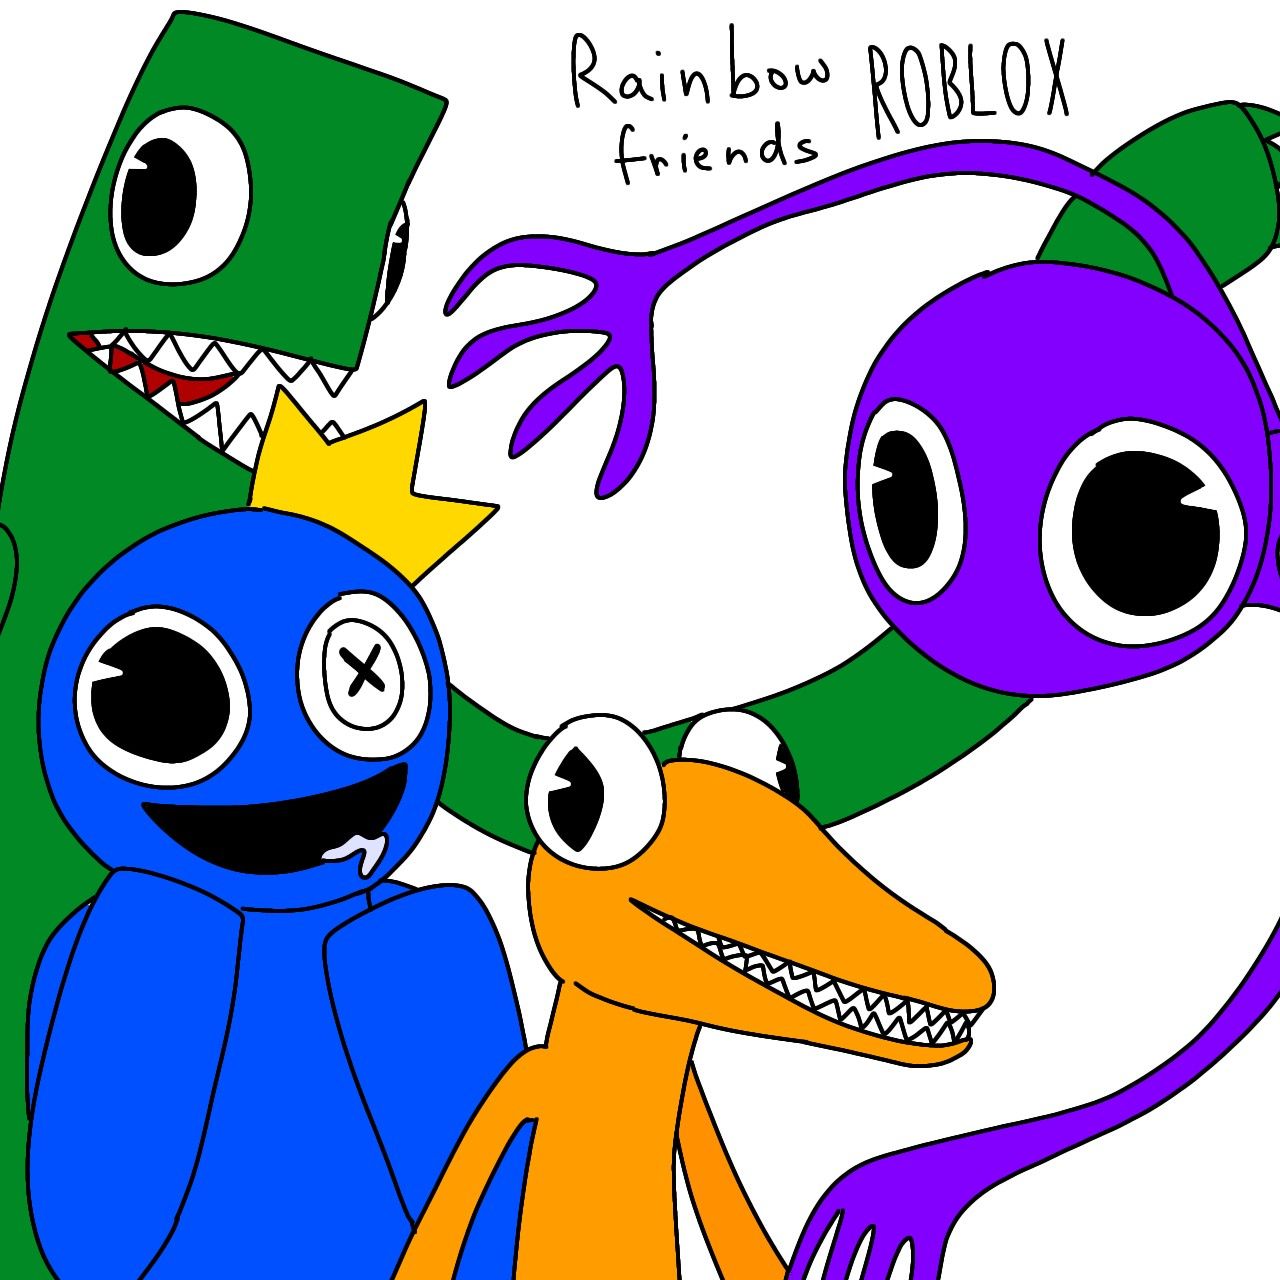 Rainbow friends roblox. Rainbow, Friends wallpaper, Drawings of friends